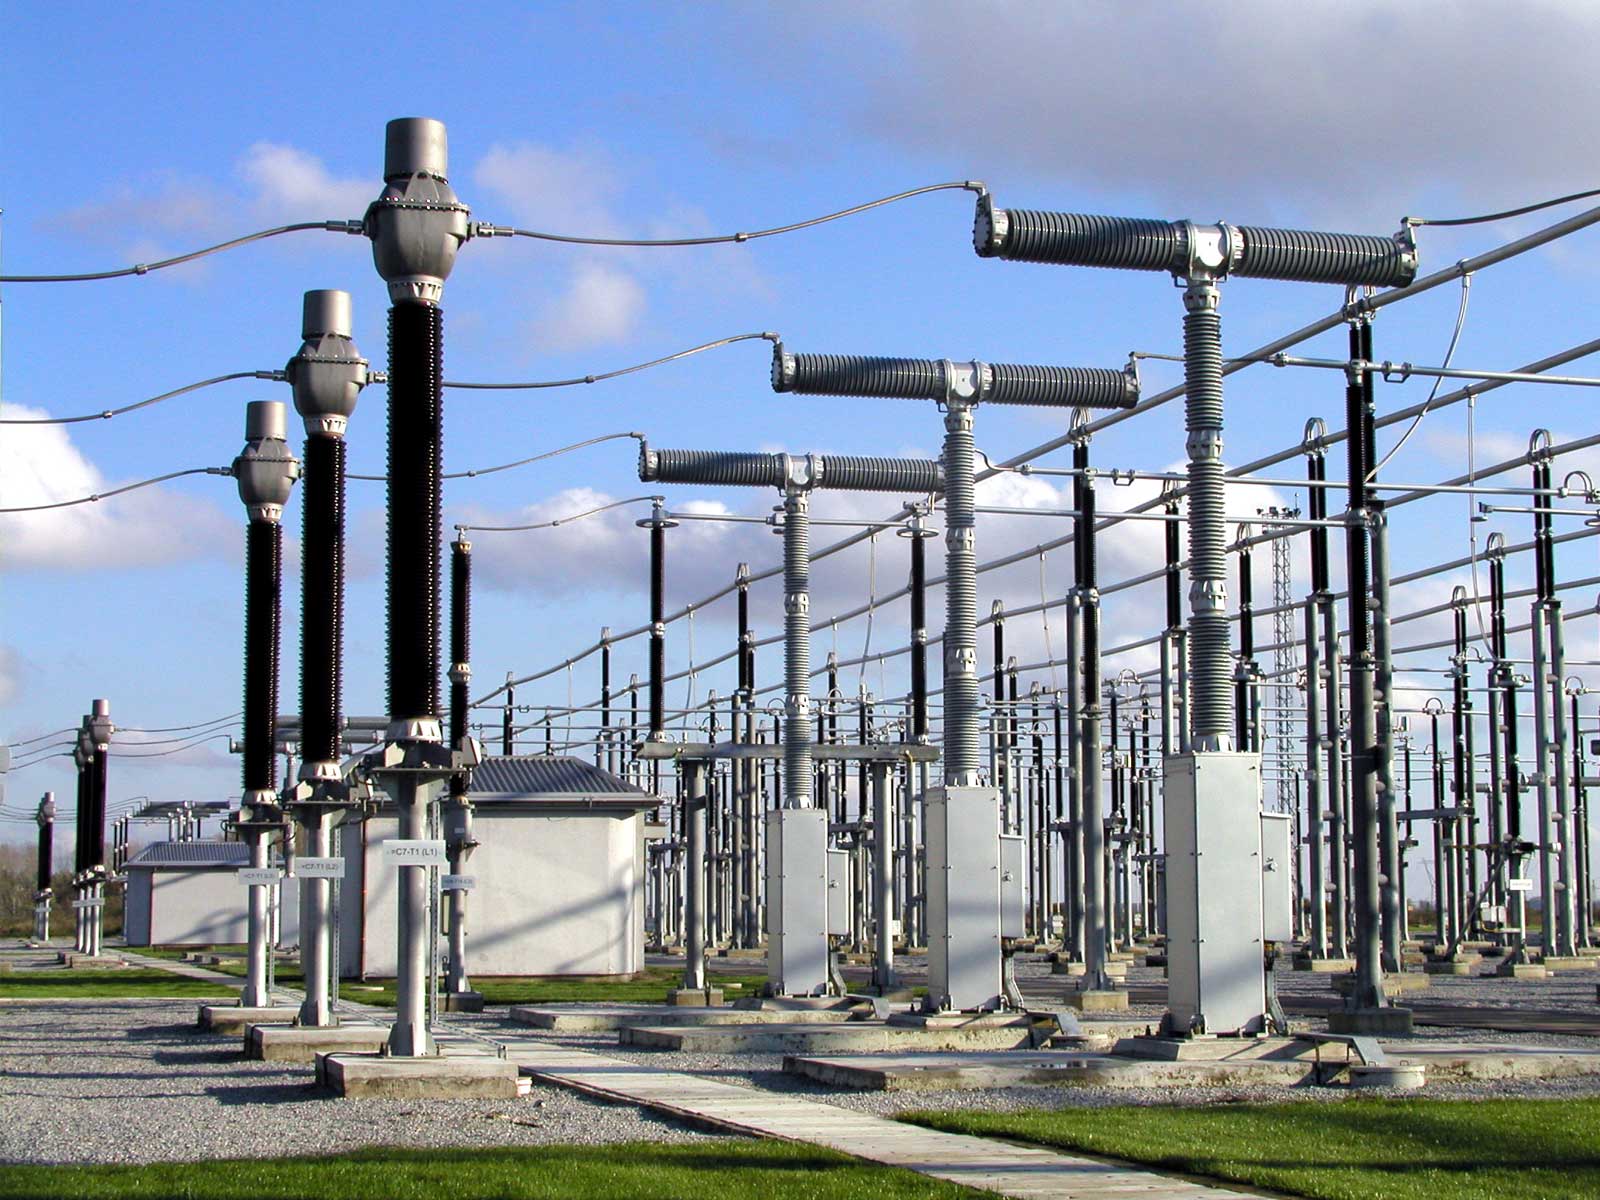 Power Transmission & Distribution